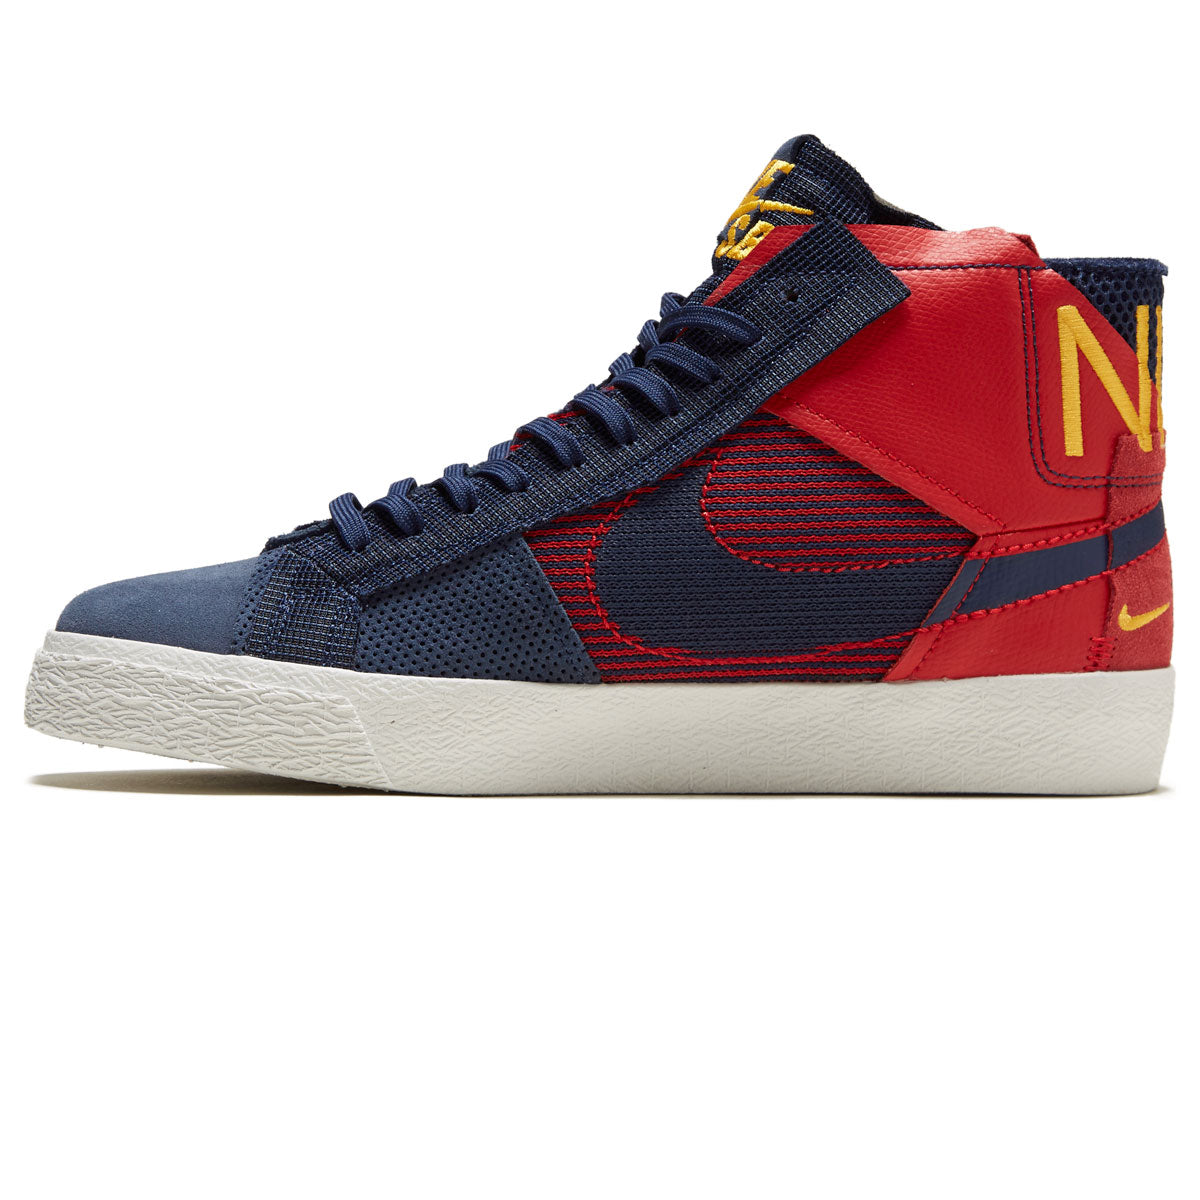 Nike SB Zoom Blazer Mid Prm Shoes - University Red/Midnight Navy image 2